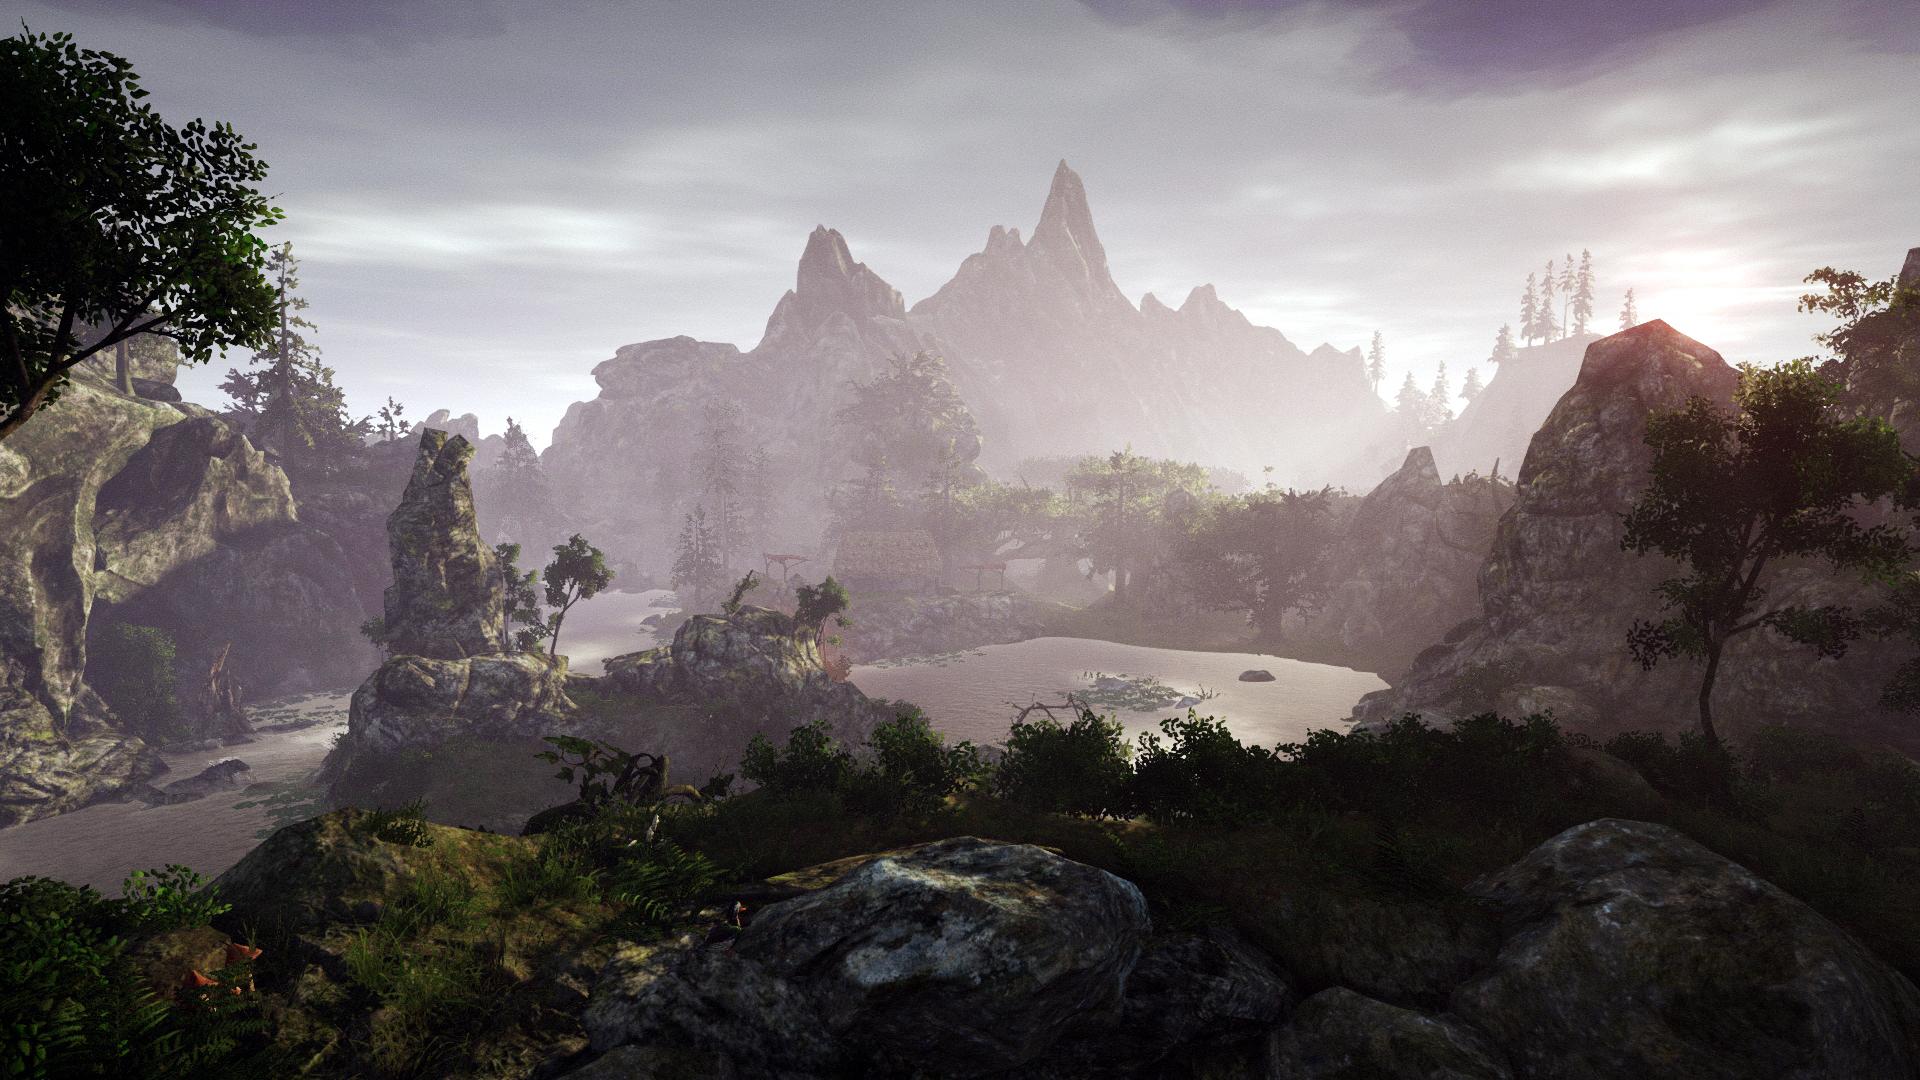 Screenshot №11 from game Risen 3 - Titan Lords